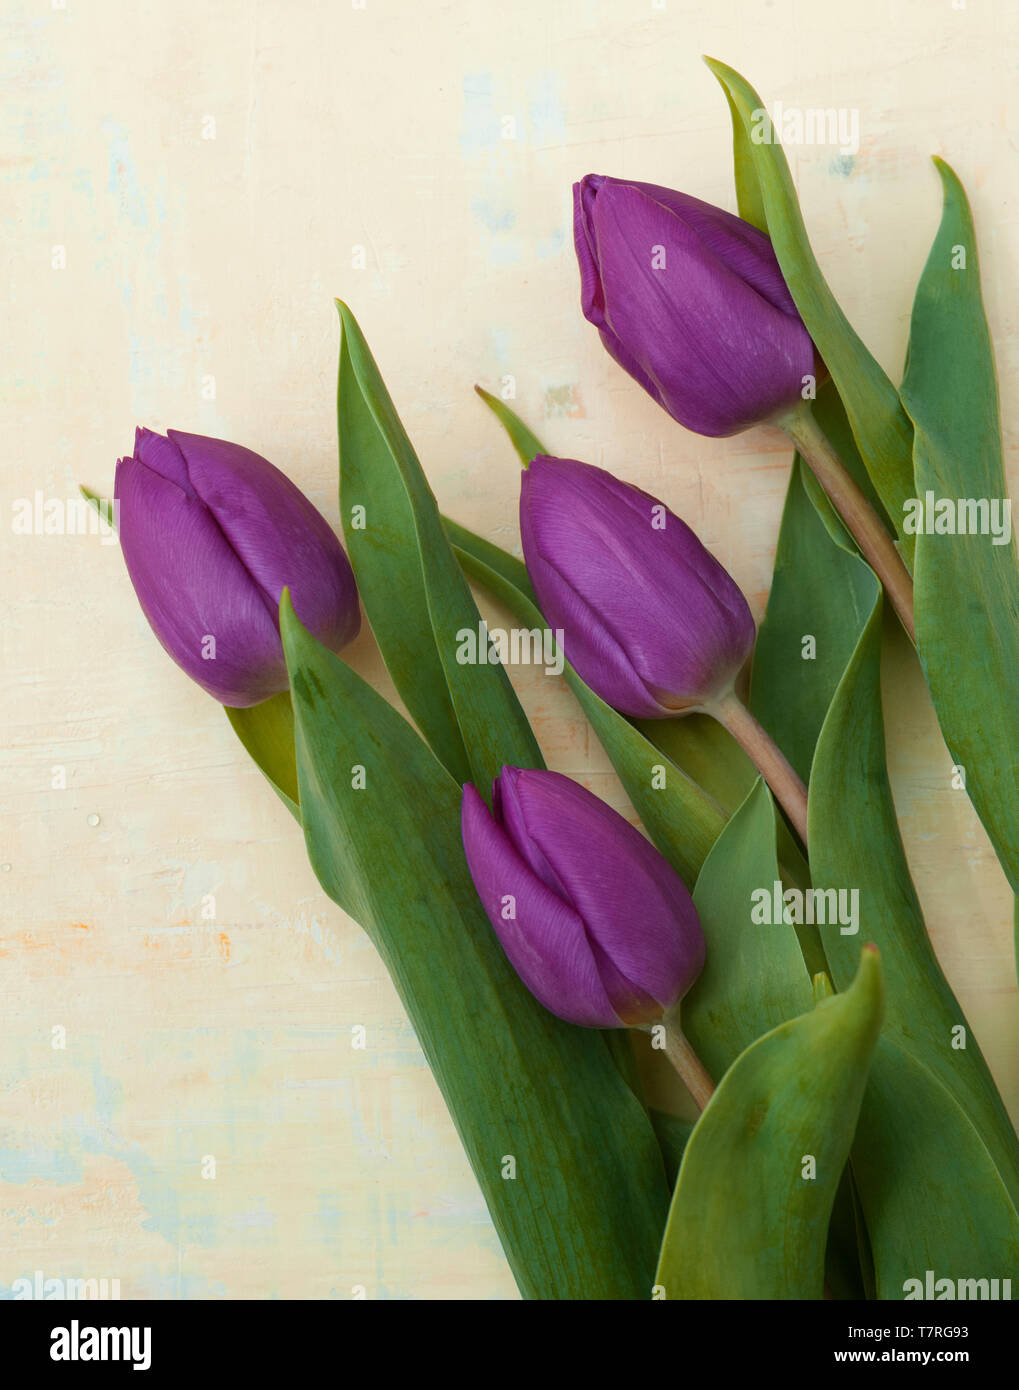 Cuatro Tulipanes púrpura sobre un fondo amarillo Foto de stock